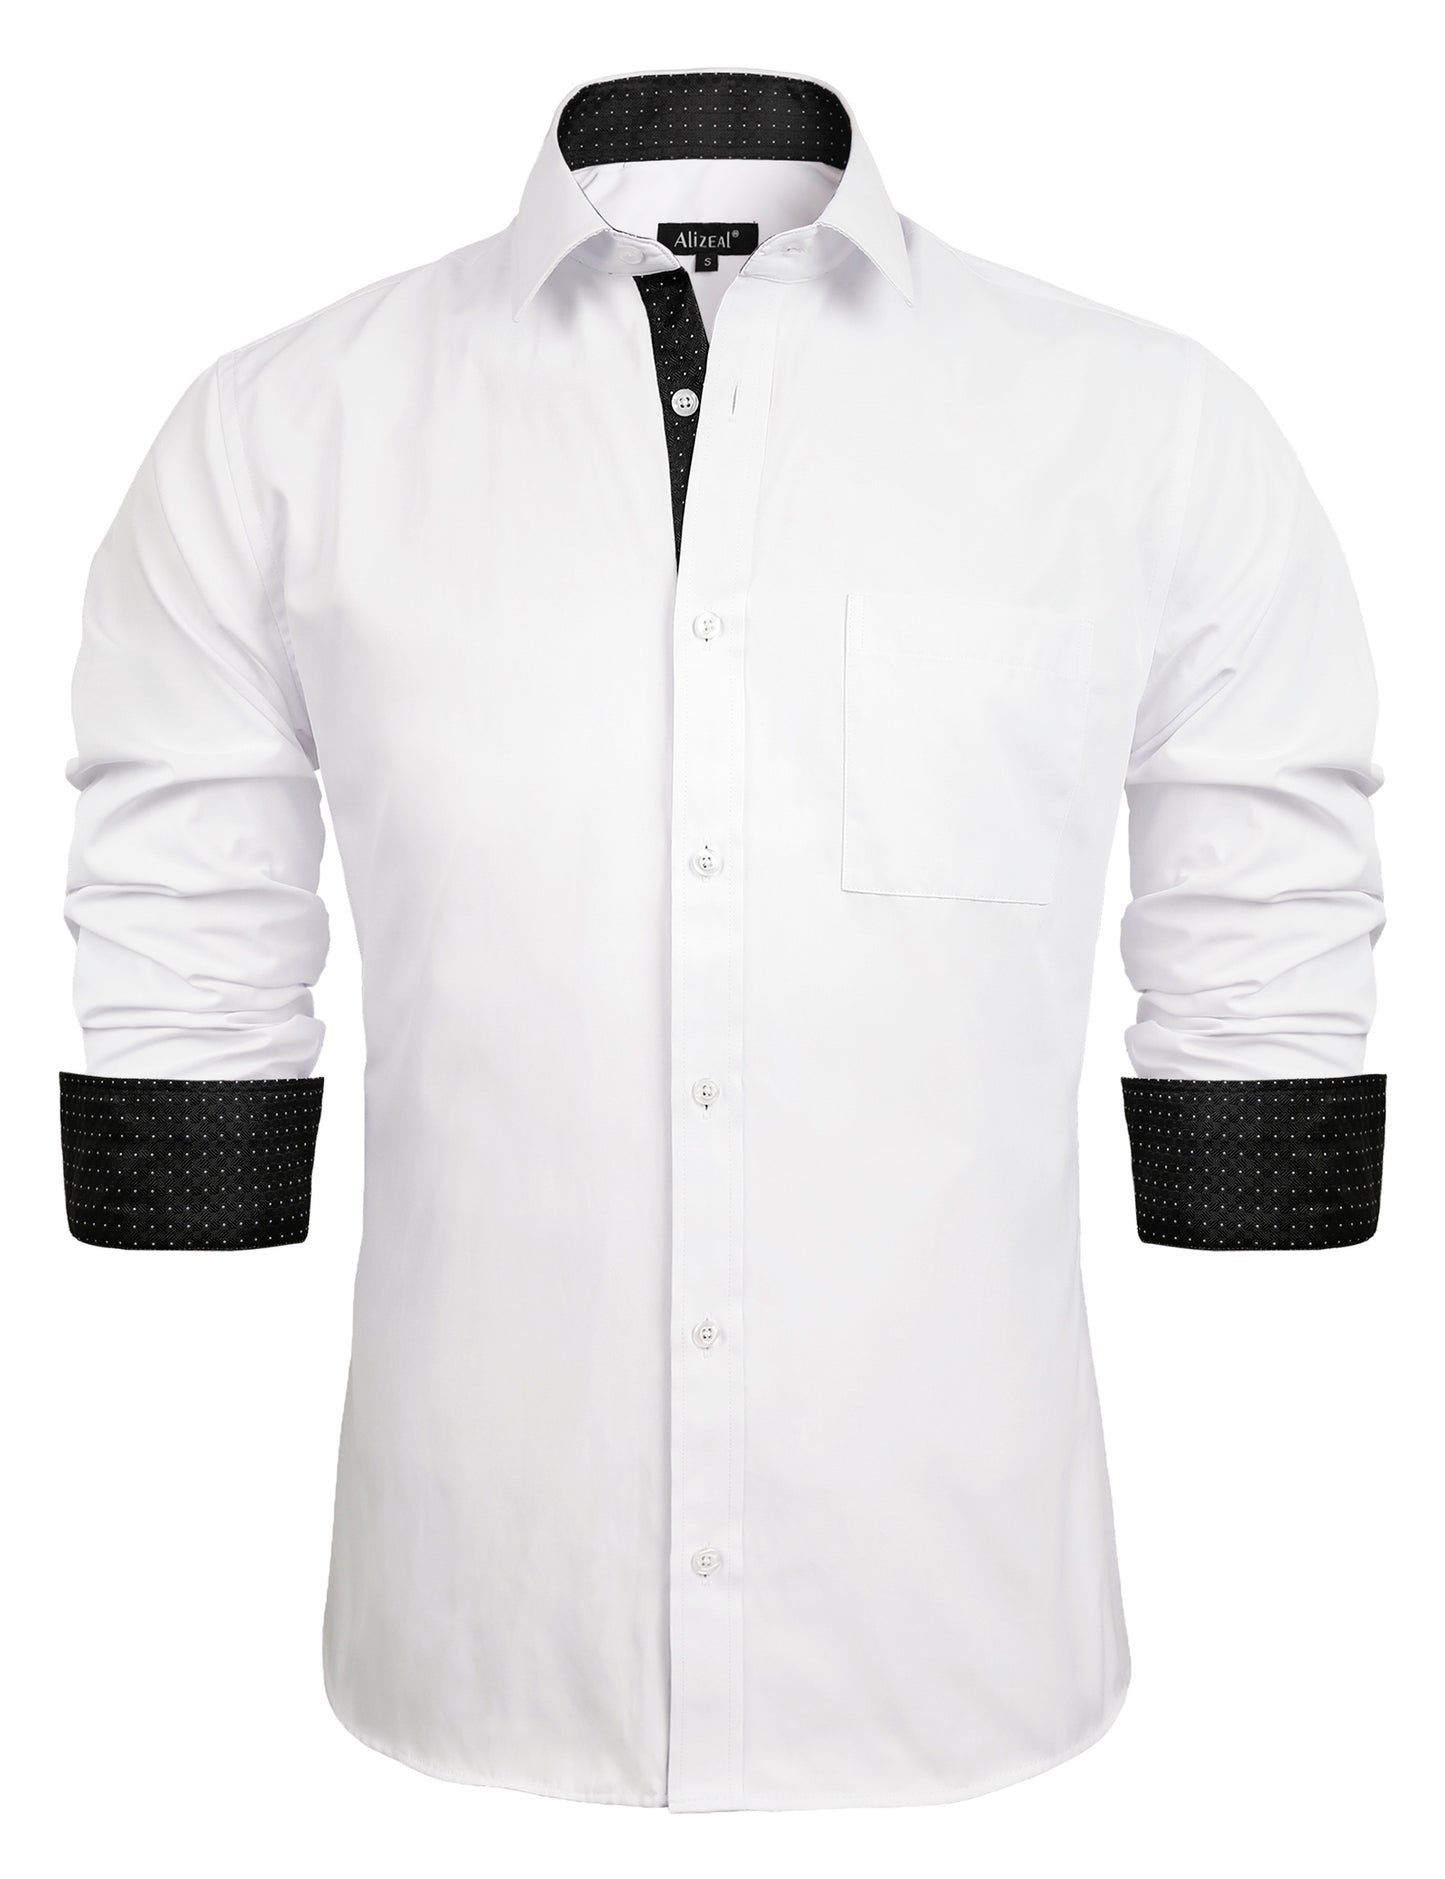 Men's Long Sleeve Dress Shirts Polka Dot Patchwork Button Down Formal Shirts, 116-White+Black Dots